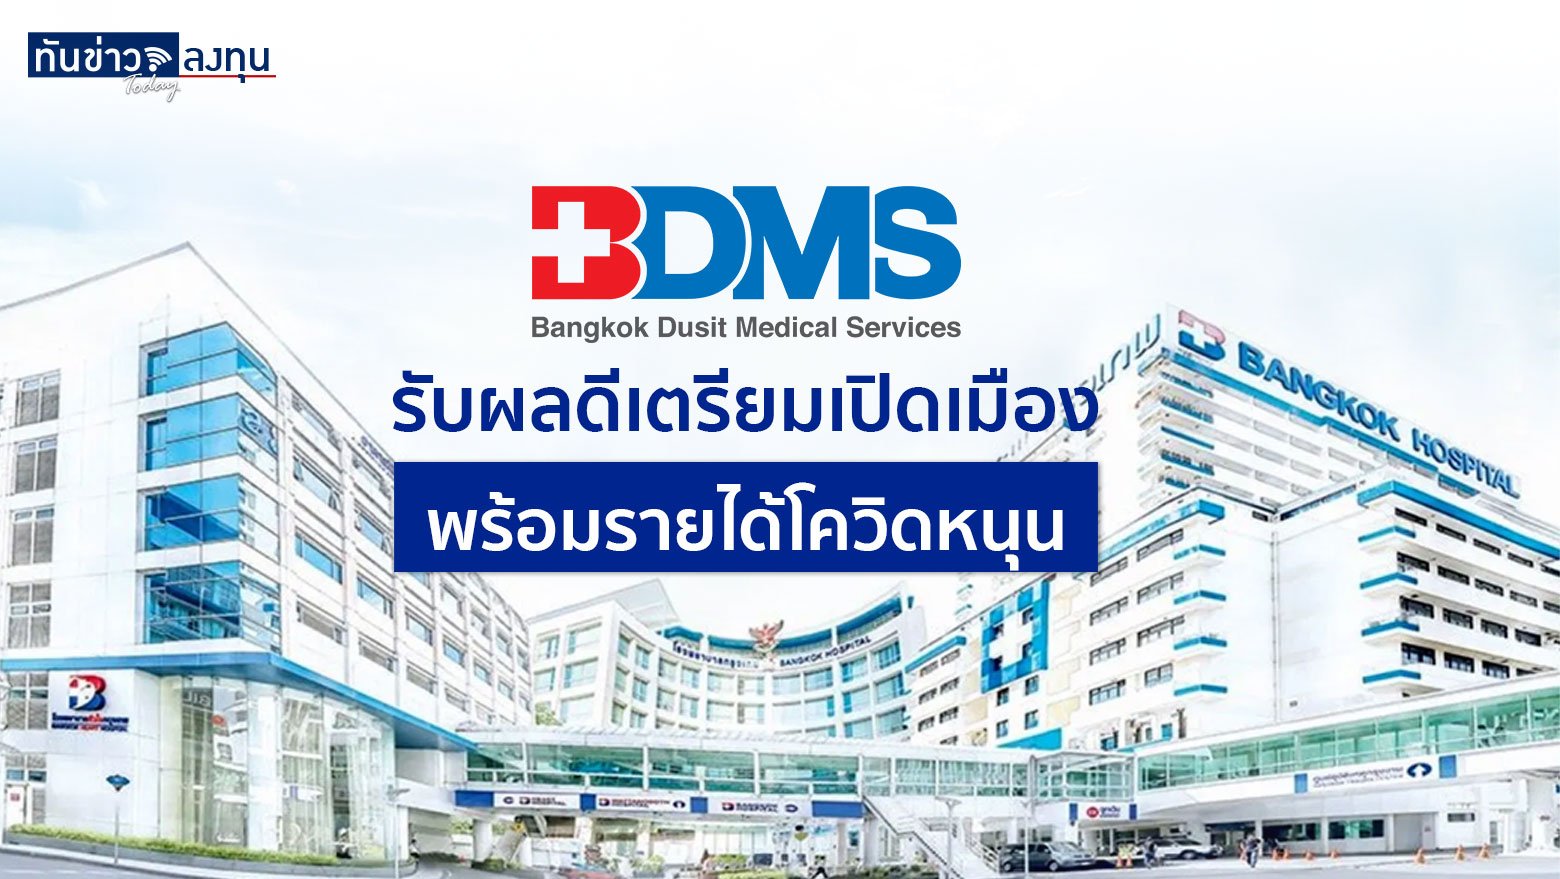 BDMS รับผลดีเตรียมเปิดเมืองพร้อมรายได้โควิดหนุน